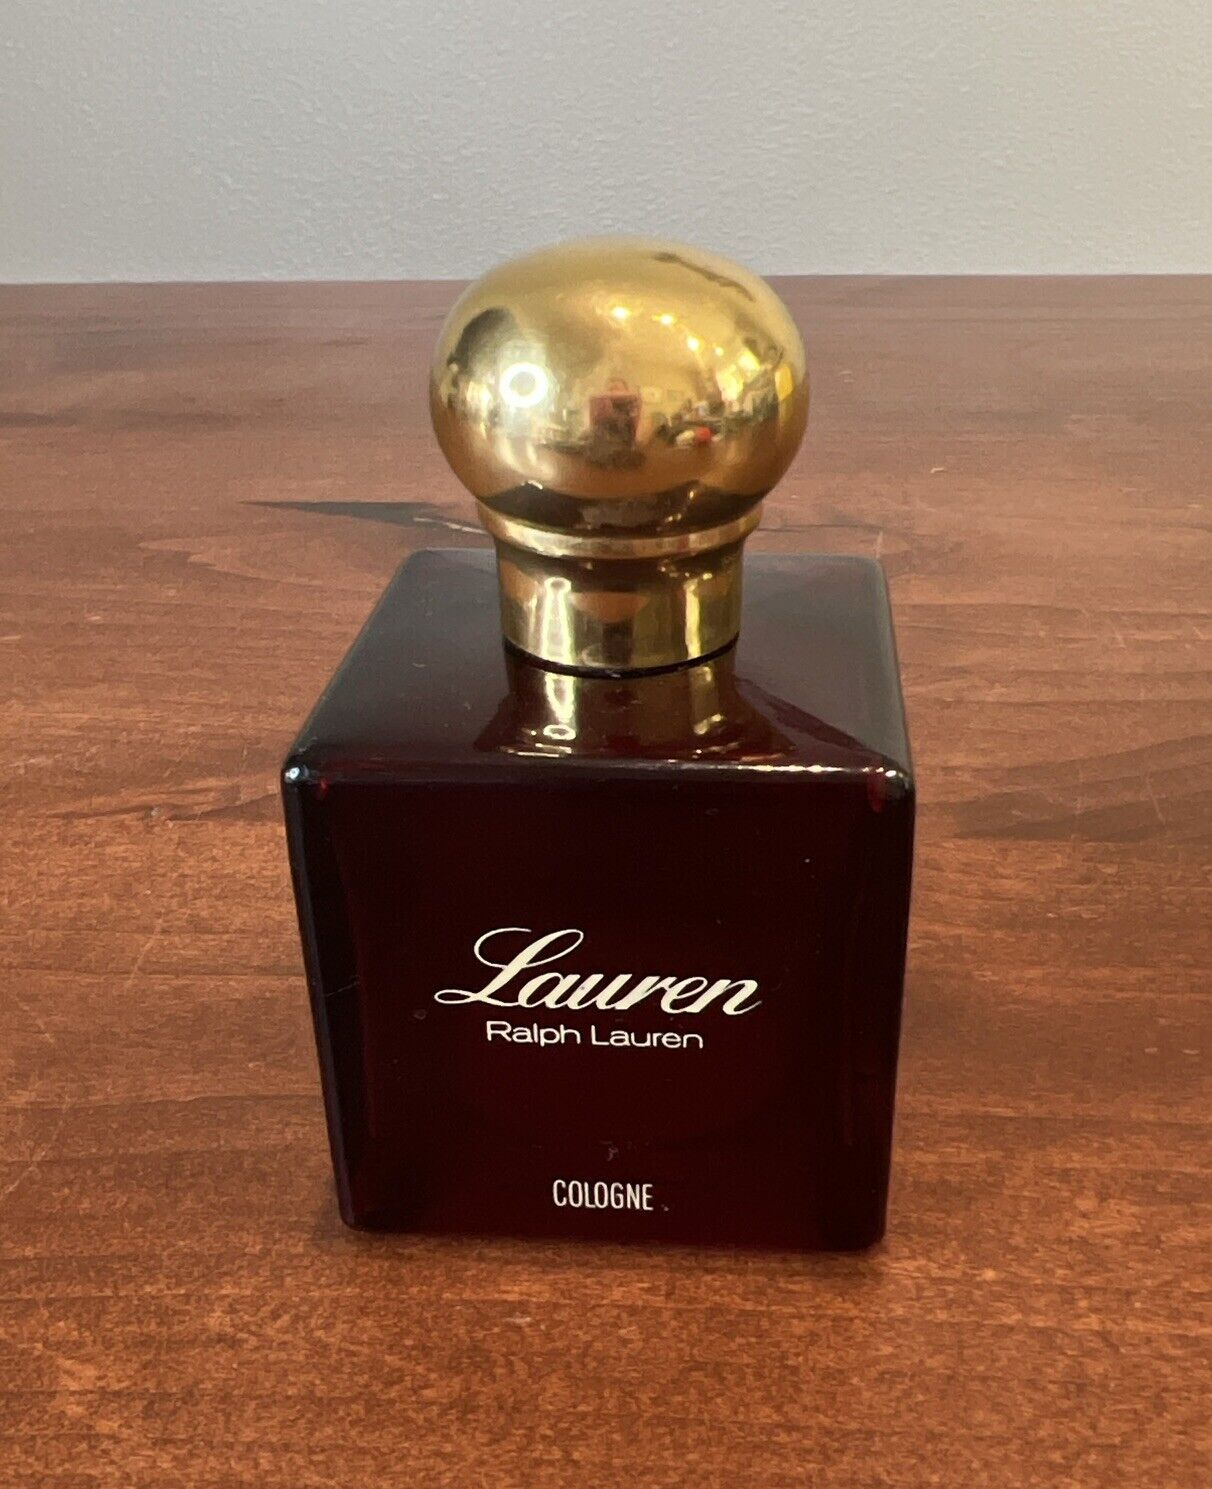 Vintage Ralph Lauren - LAUREN - Cologne Perfume- 4 oz or 118 ml-  Empty Bottle